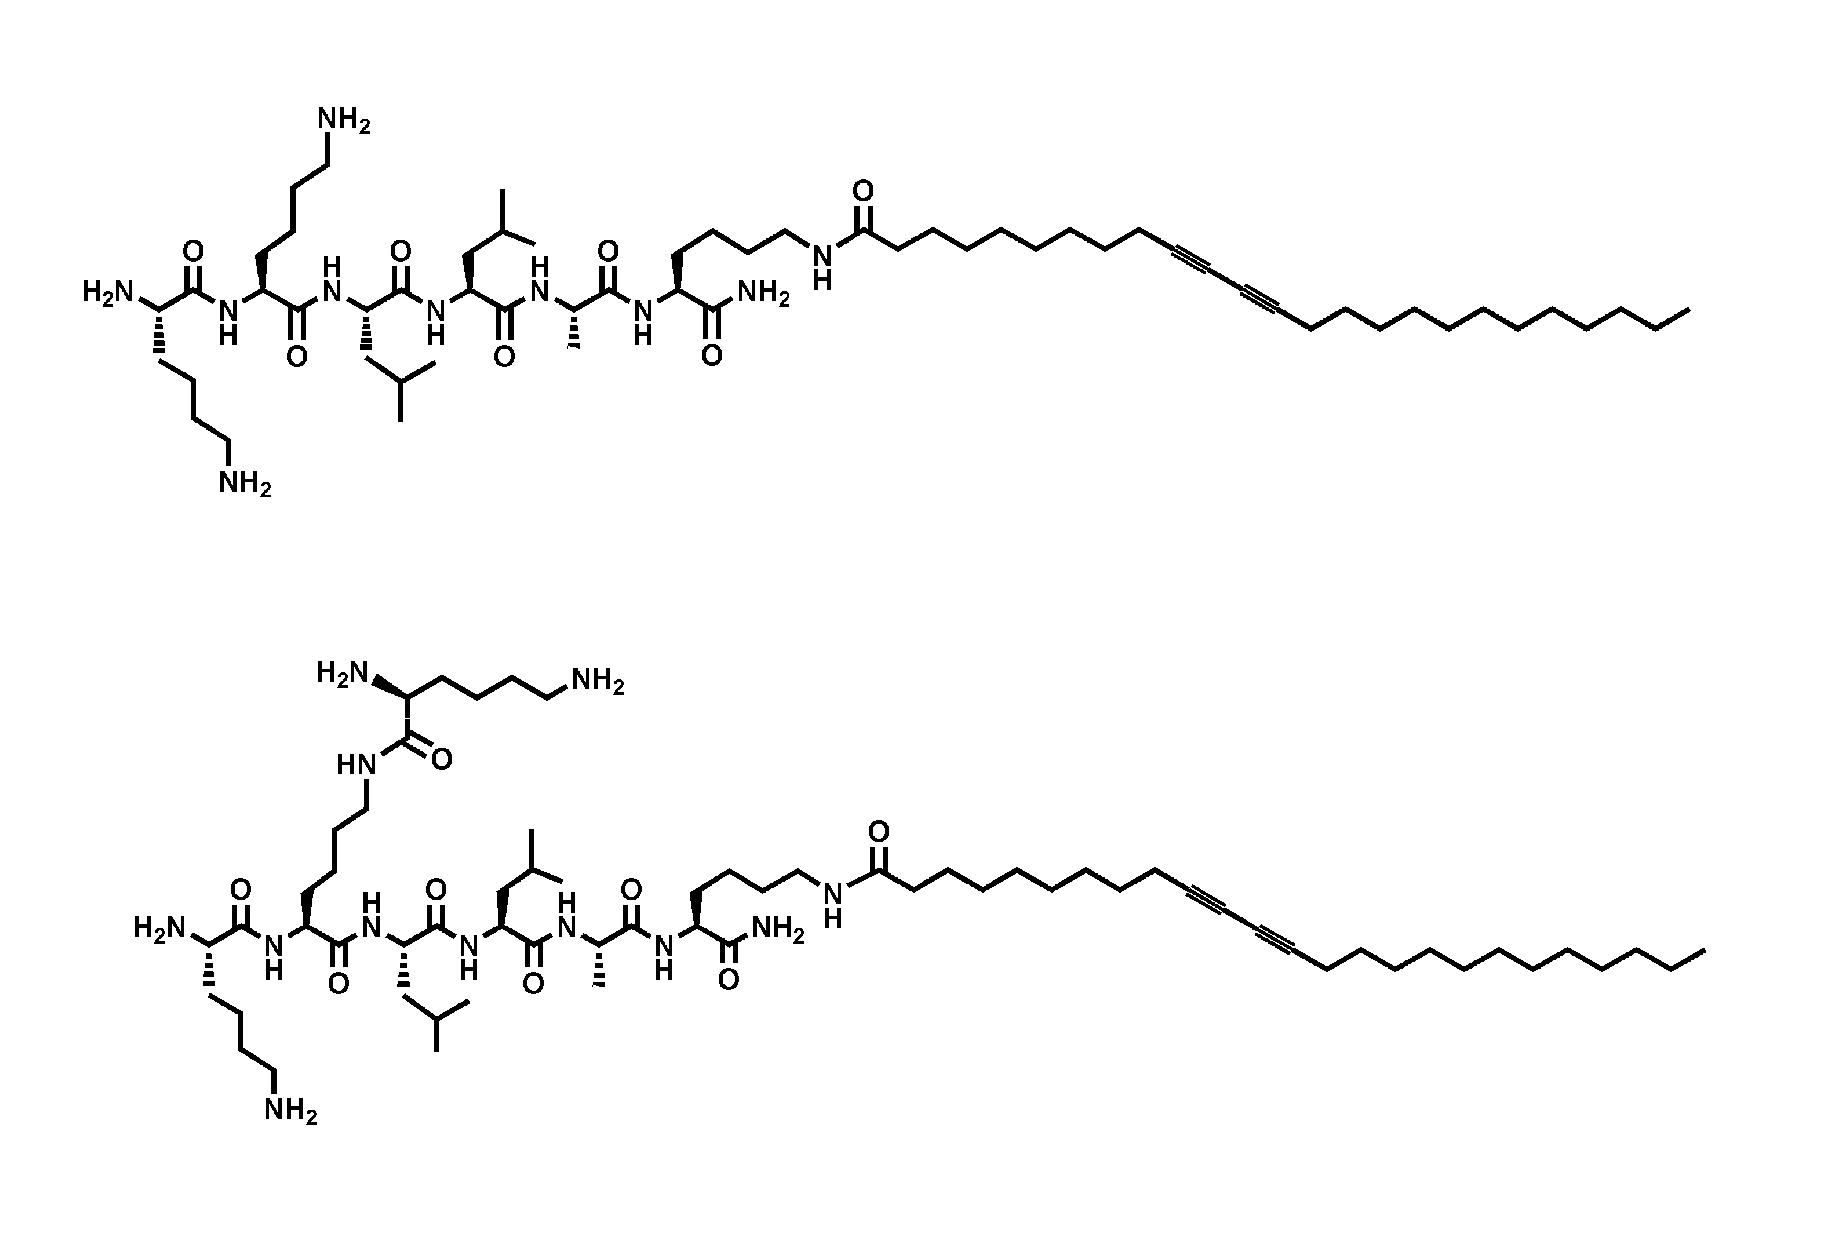 Self-assembling peptide amphiphiles